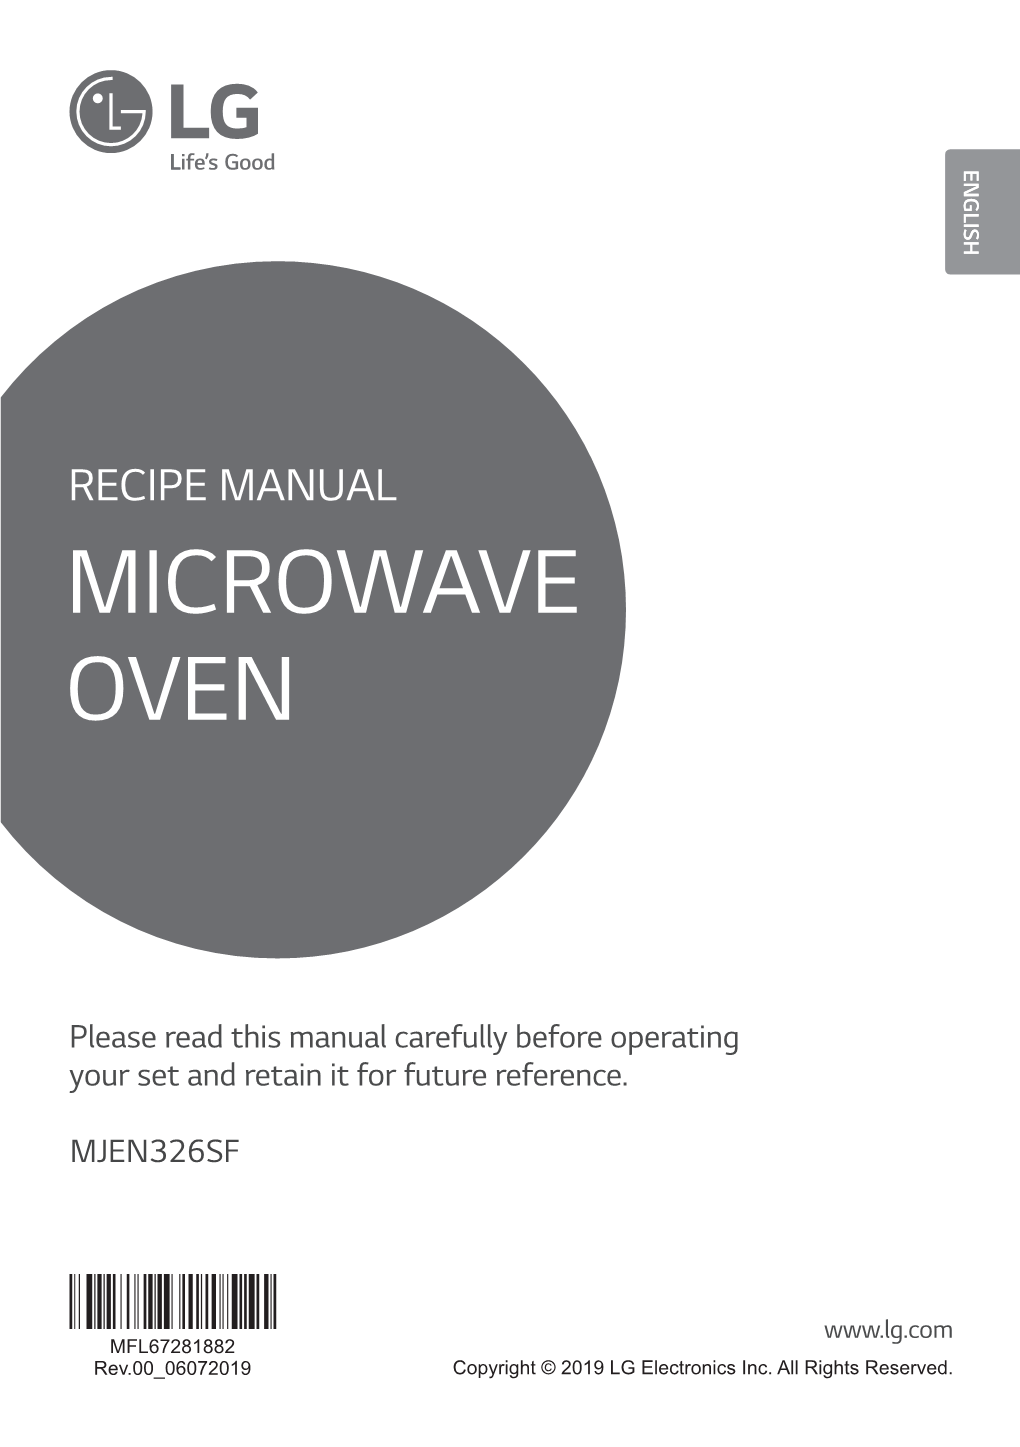 Recipe Manual Microwave Oven